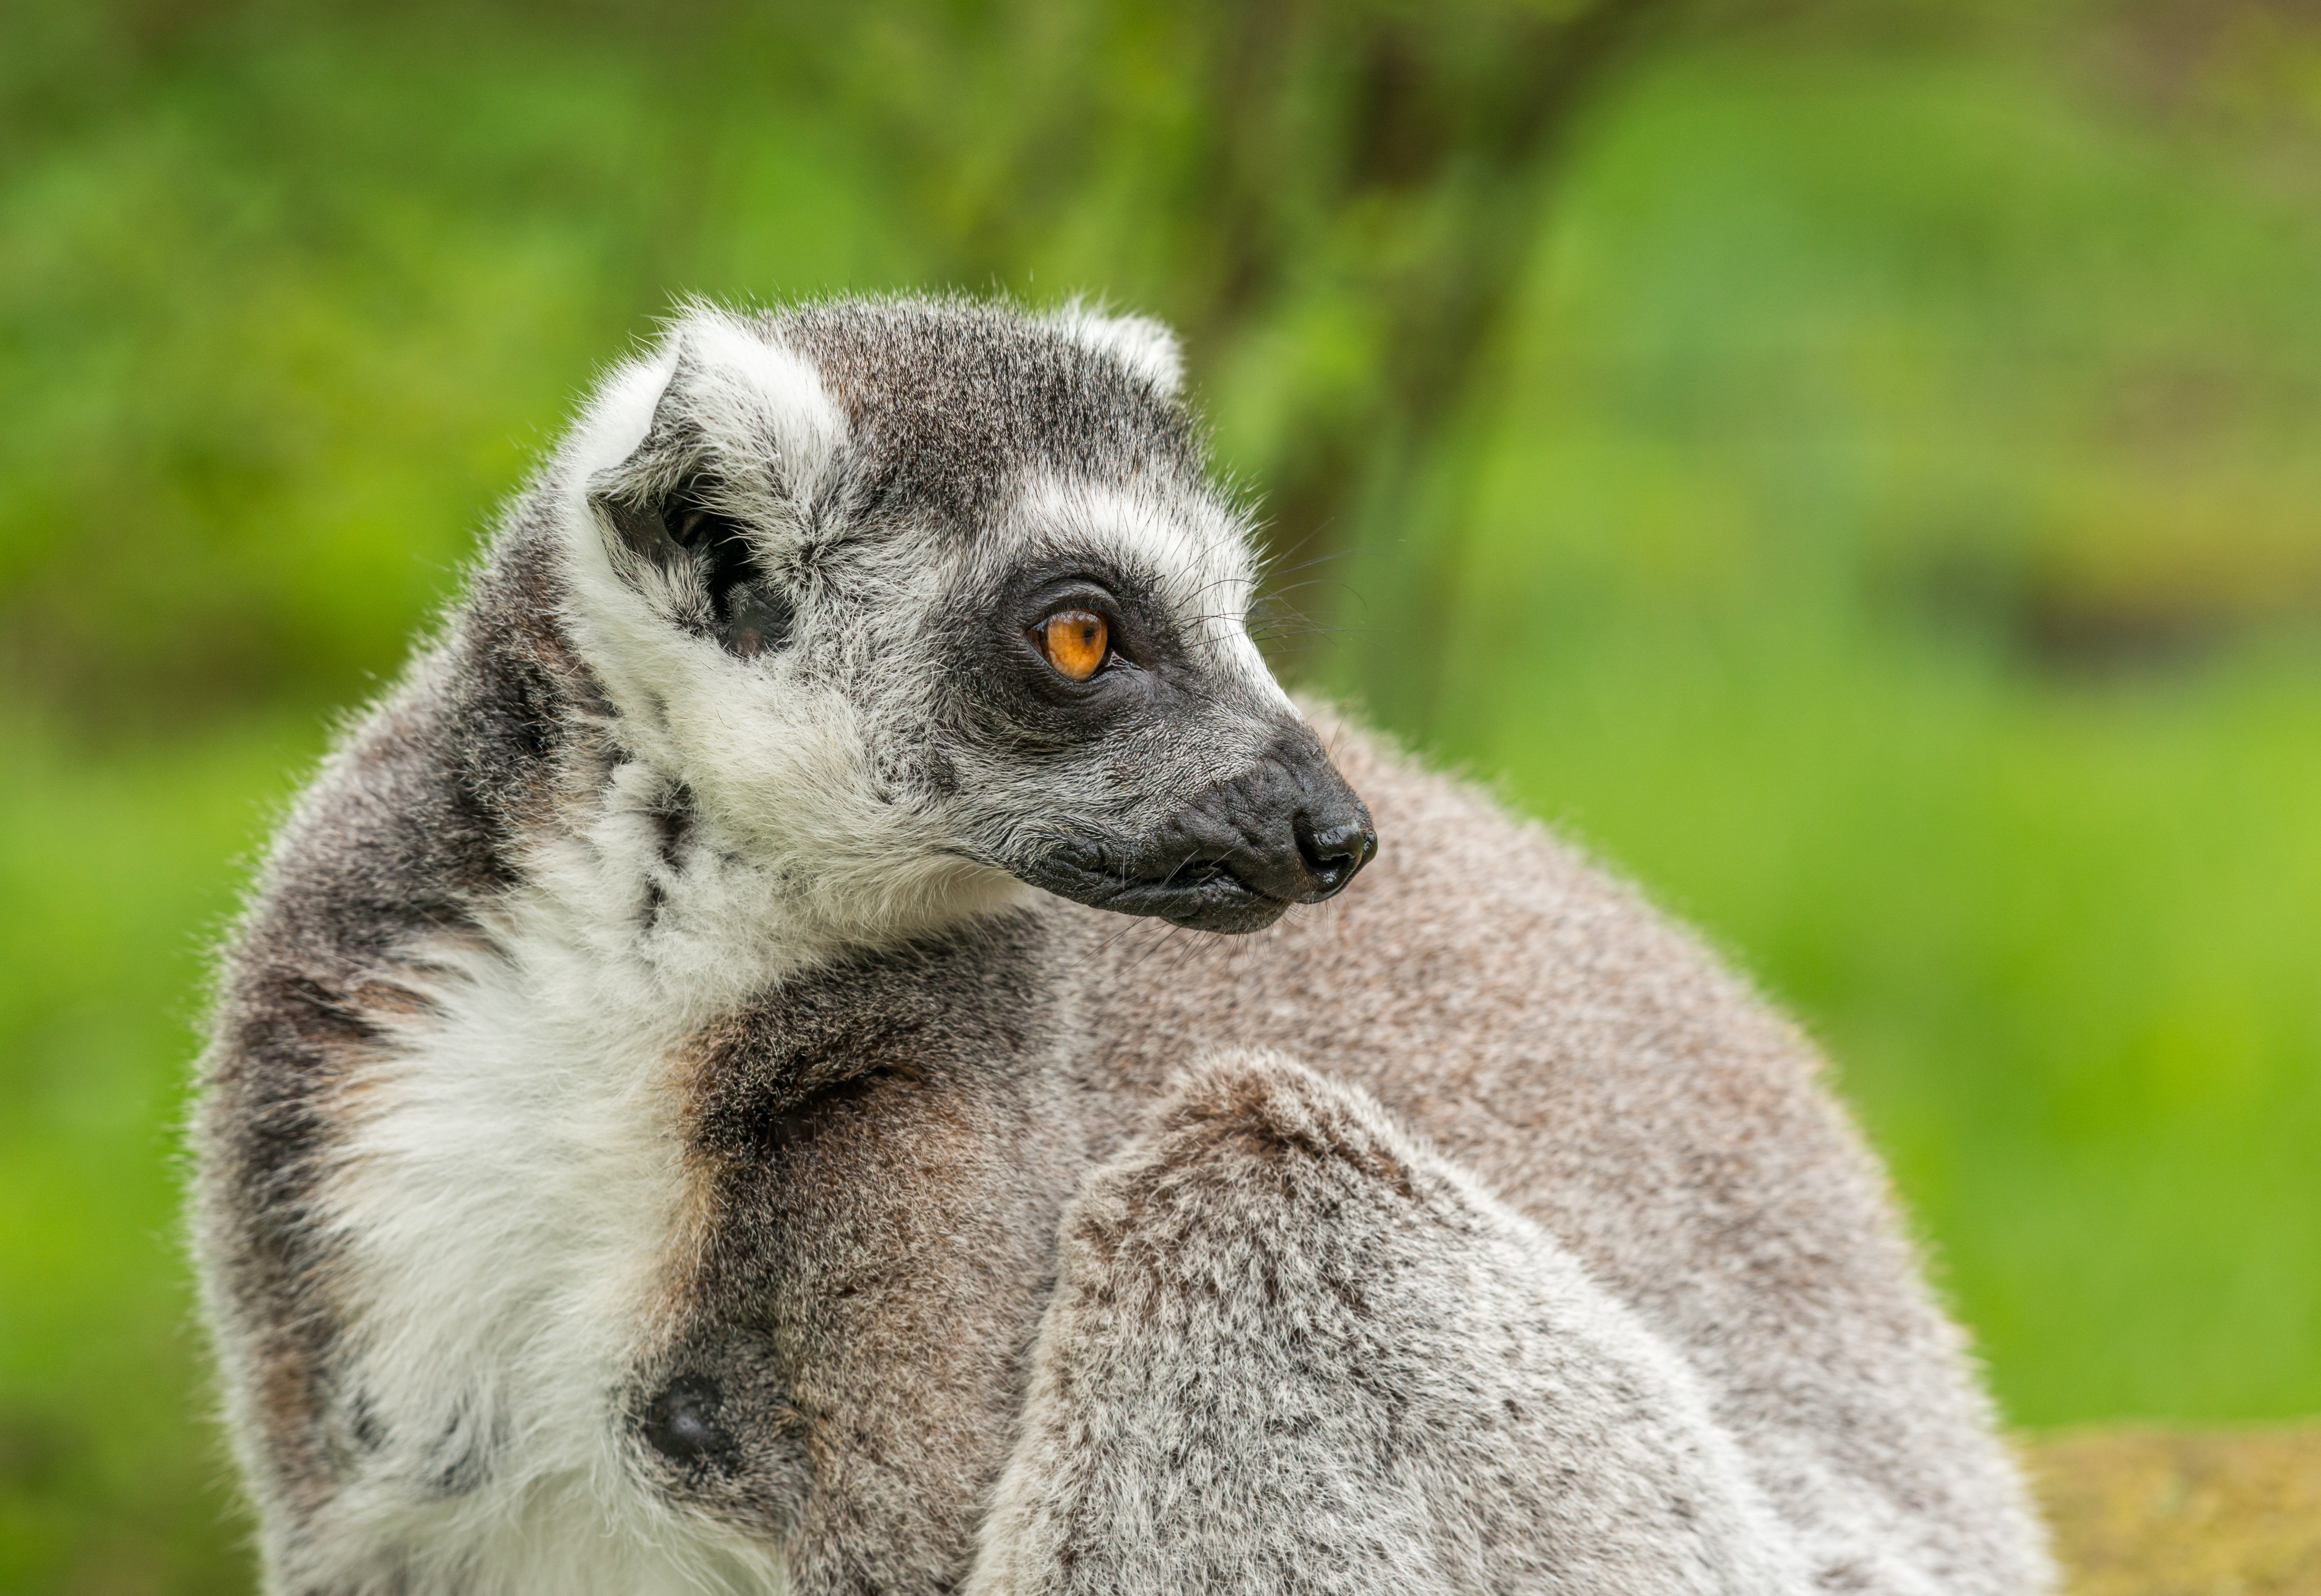 A close-up view of a lemur. | Photo: Pexels/Petr Ganaj